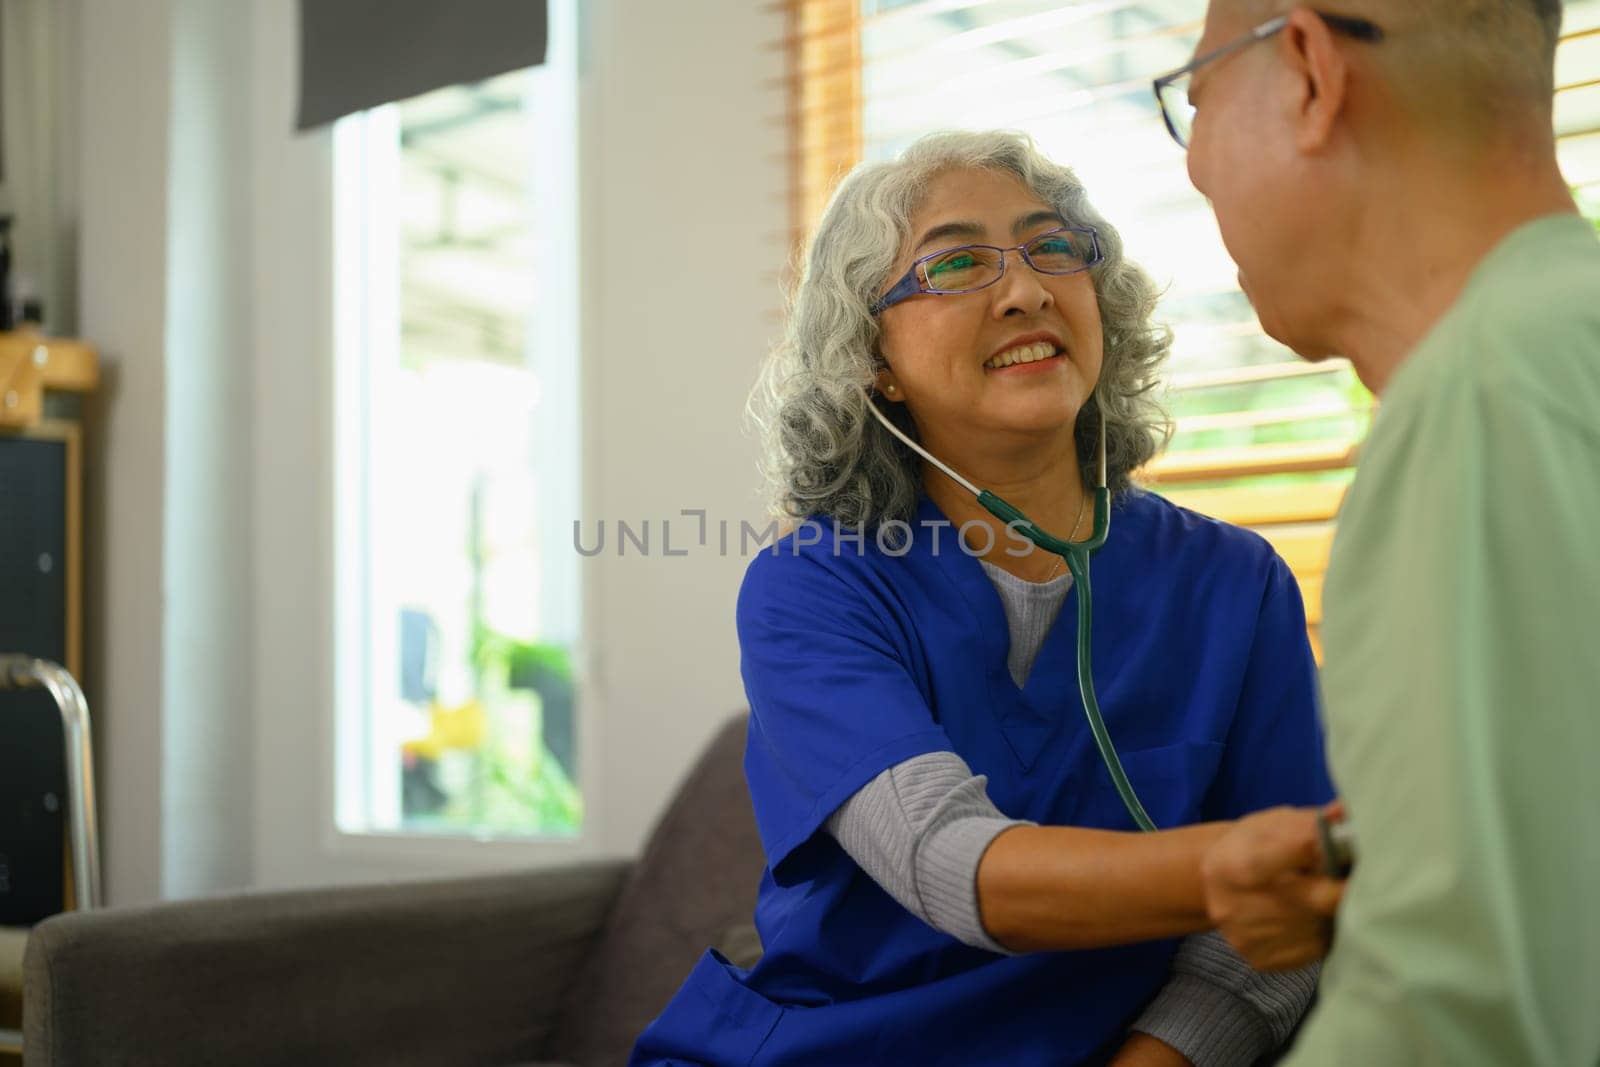 Smiling female doctor using stethoscope examining senior male during home care visit. Elderly healthcare concept.